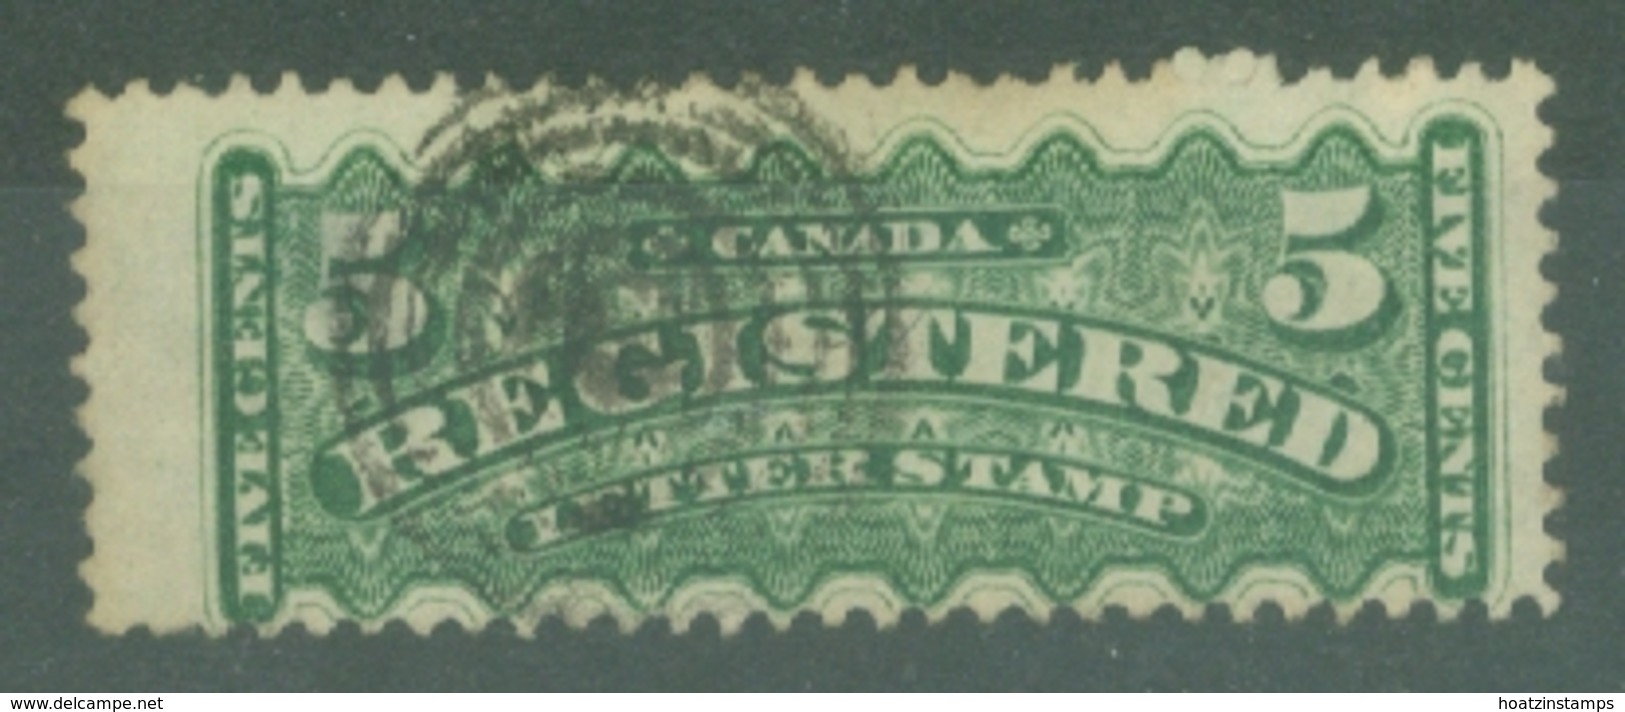 Canada: 1875/92   Registration Stamp   SG R7a    5c   Dull Sea-green   Used - Aangetekend